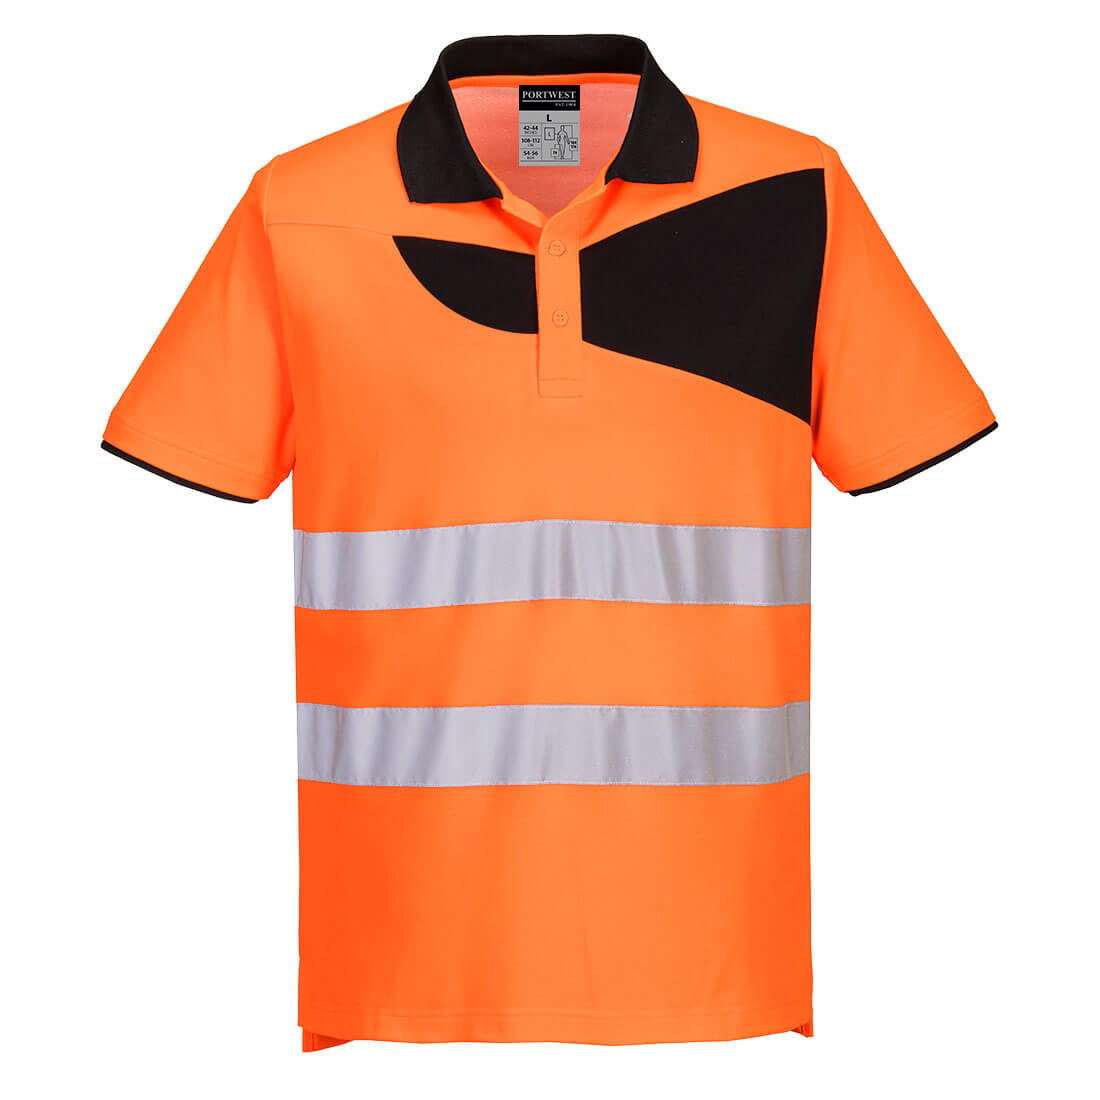 PW2 Hi-Vis Polo Shirt S/S - Orange/Black